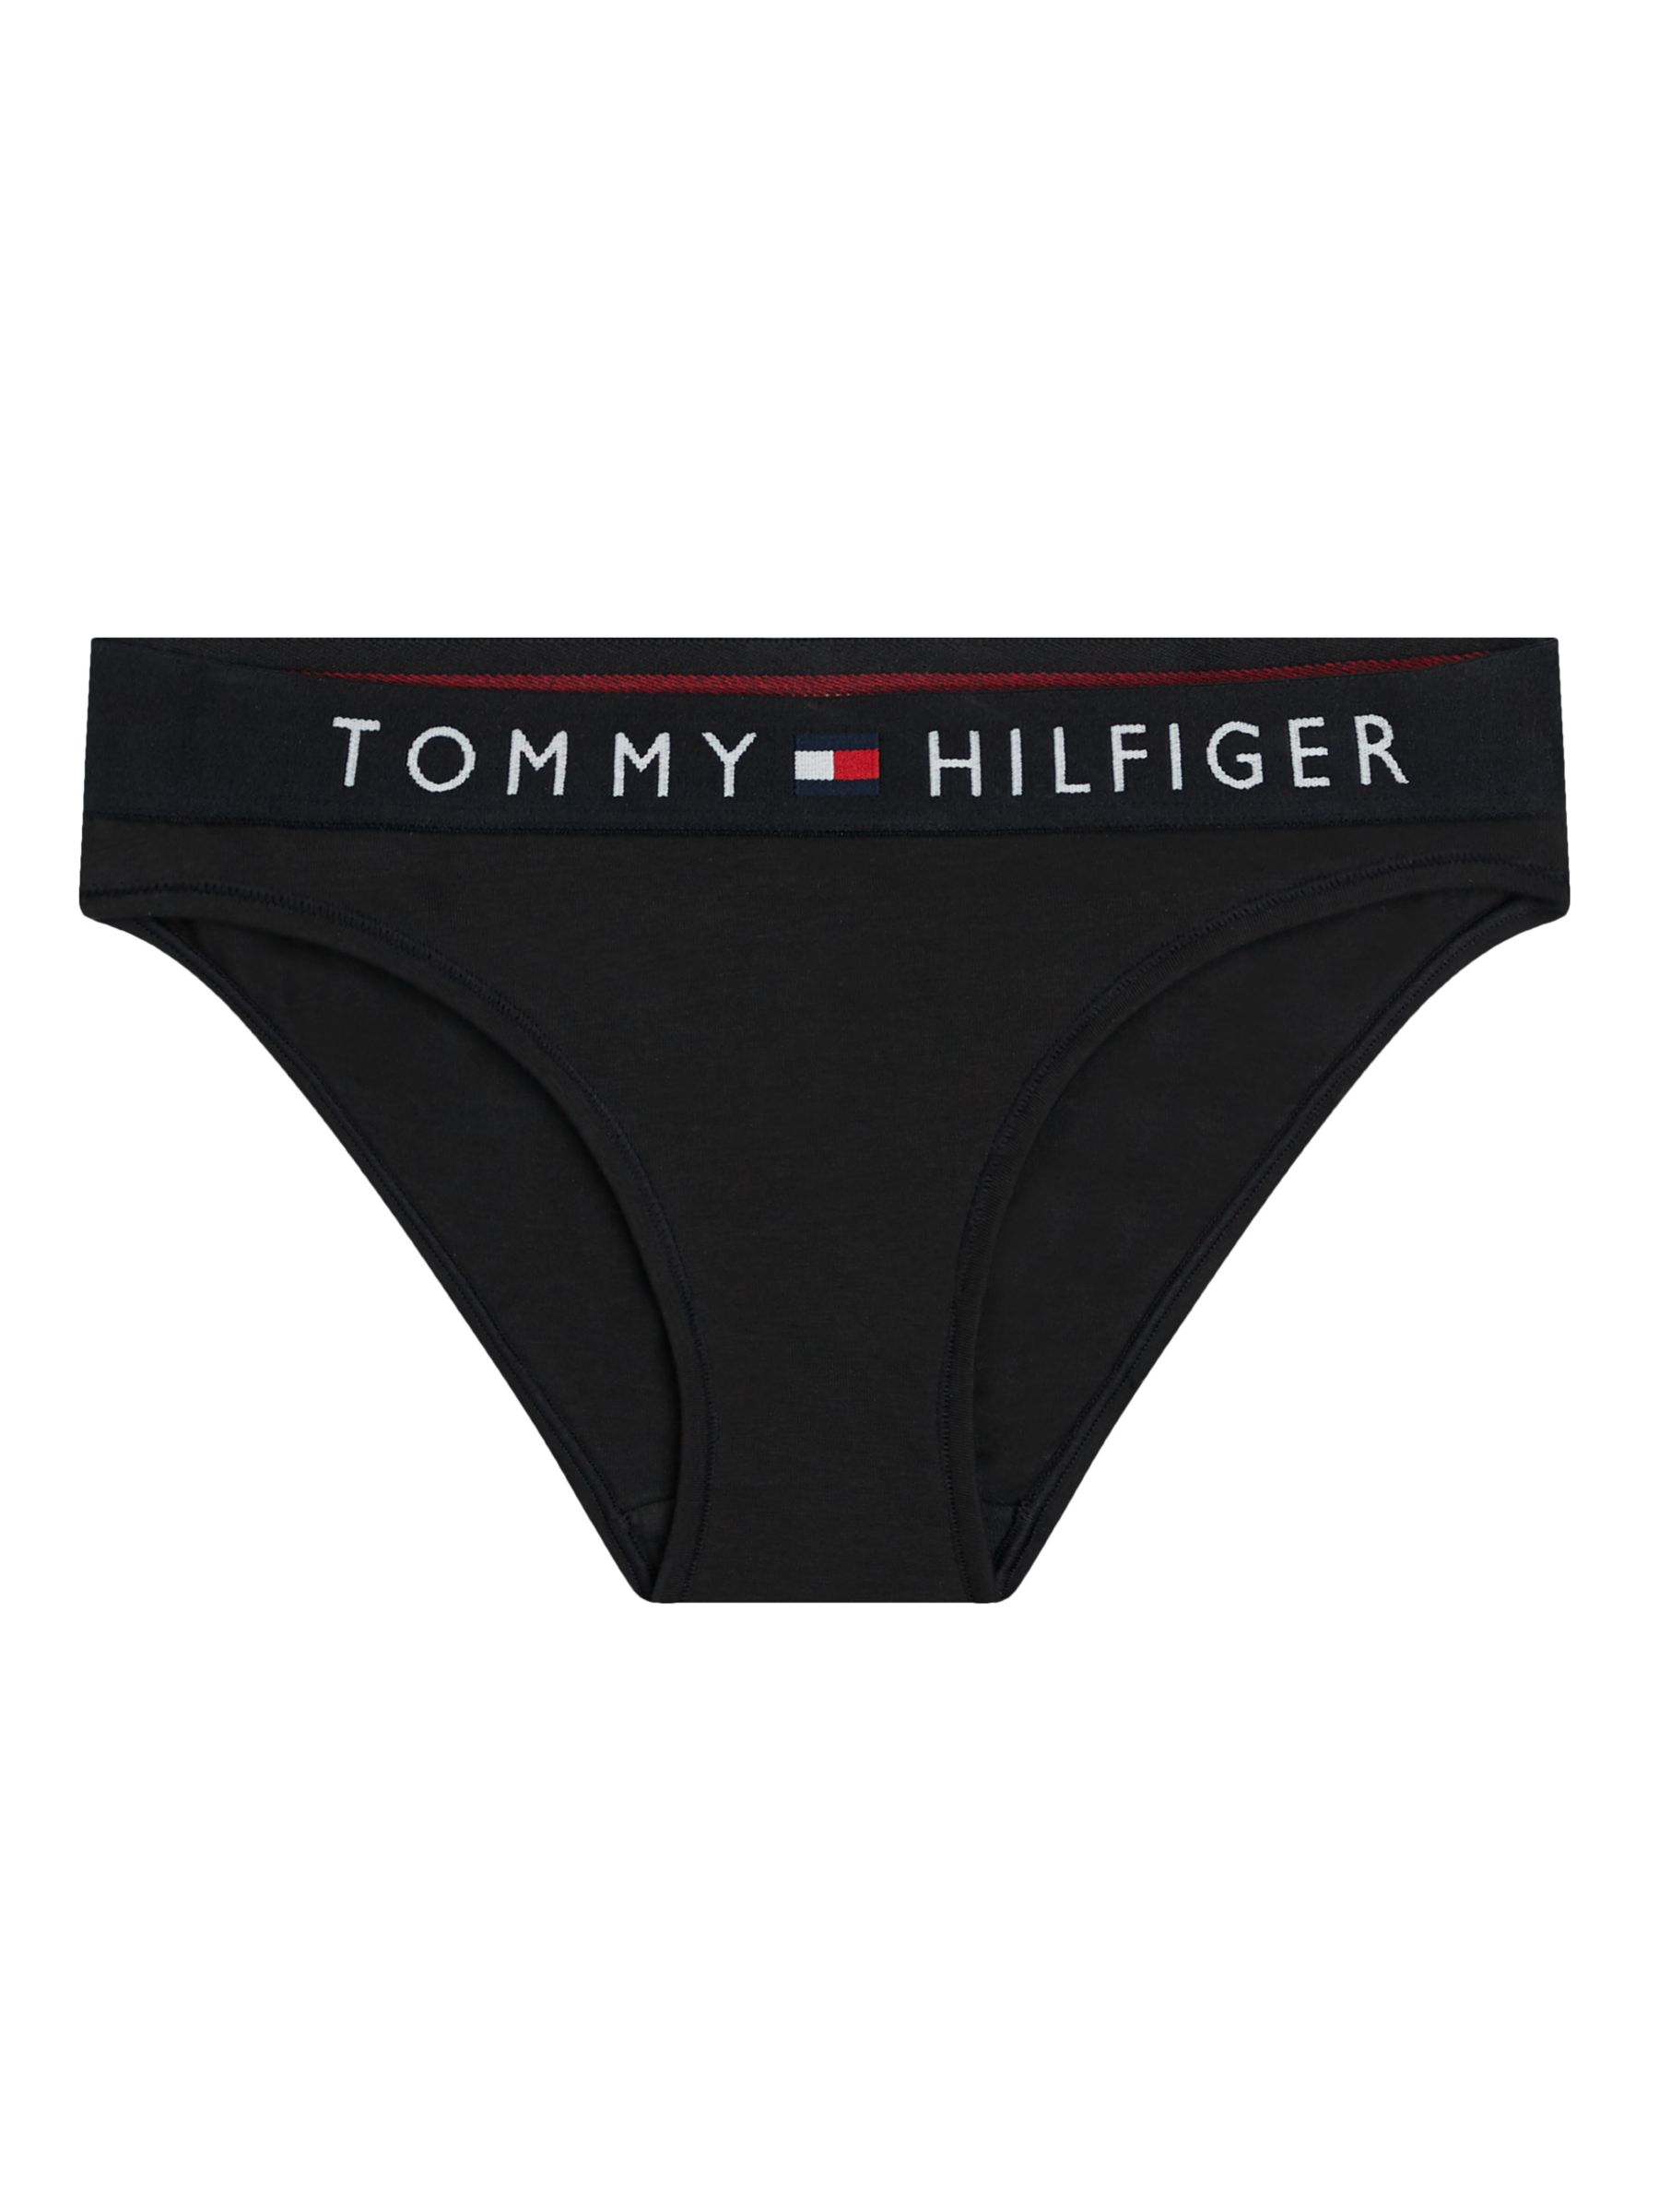 Details about   Tommy Hilfiger Logo Waistband Stretch Cotton Womens Underwear Knickers Rose